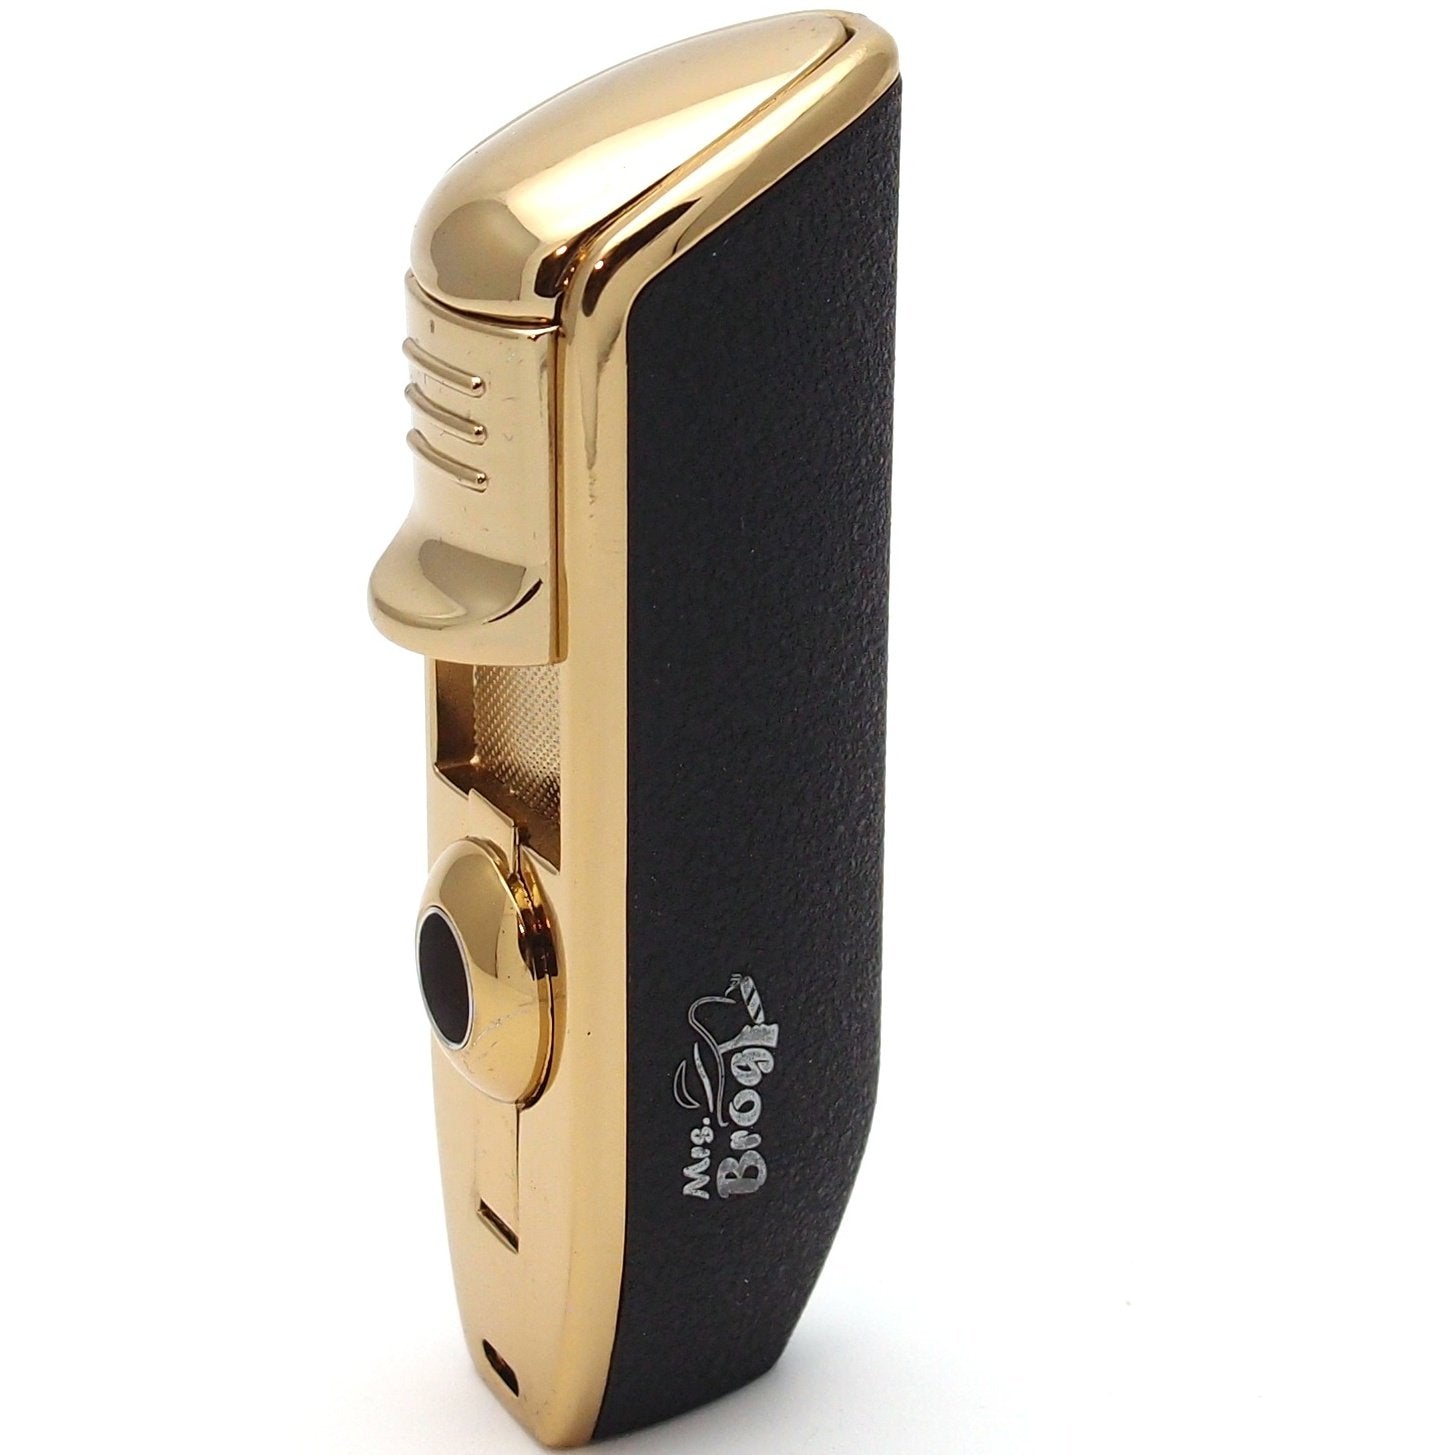 Tripple Torch Cigar Lighter - with Built in Cigar Punch